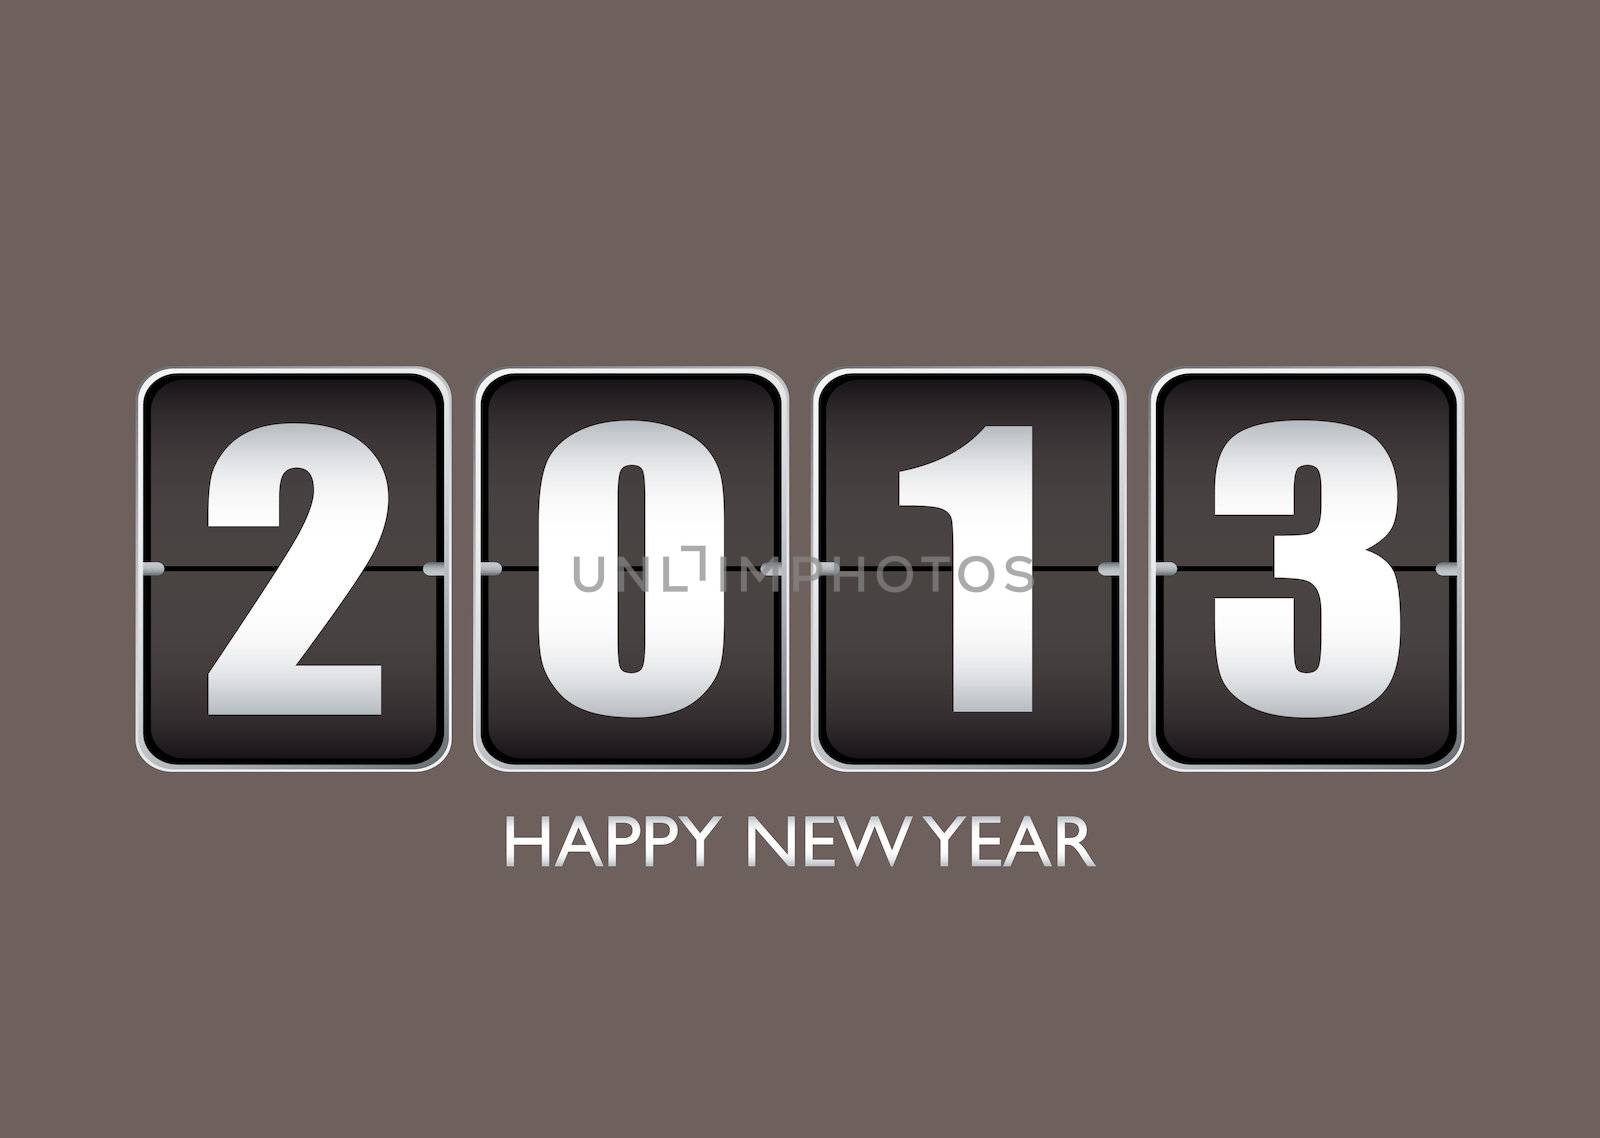 Happy new year 12013 by nicemonkey